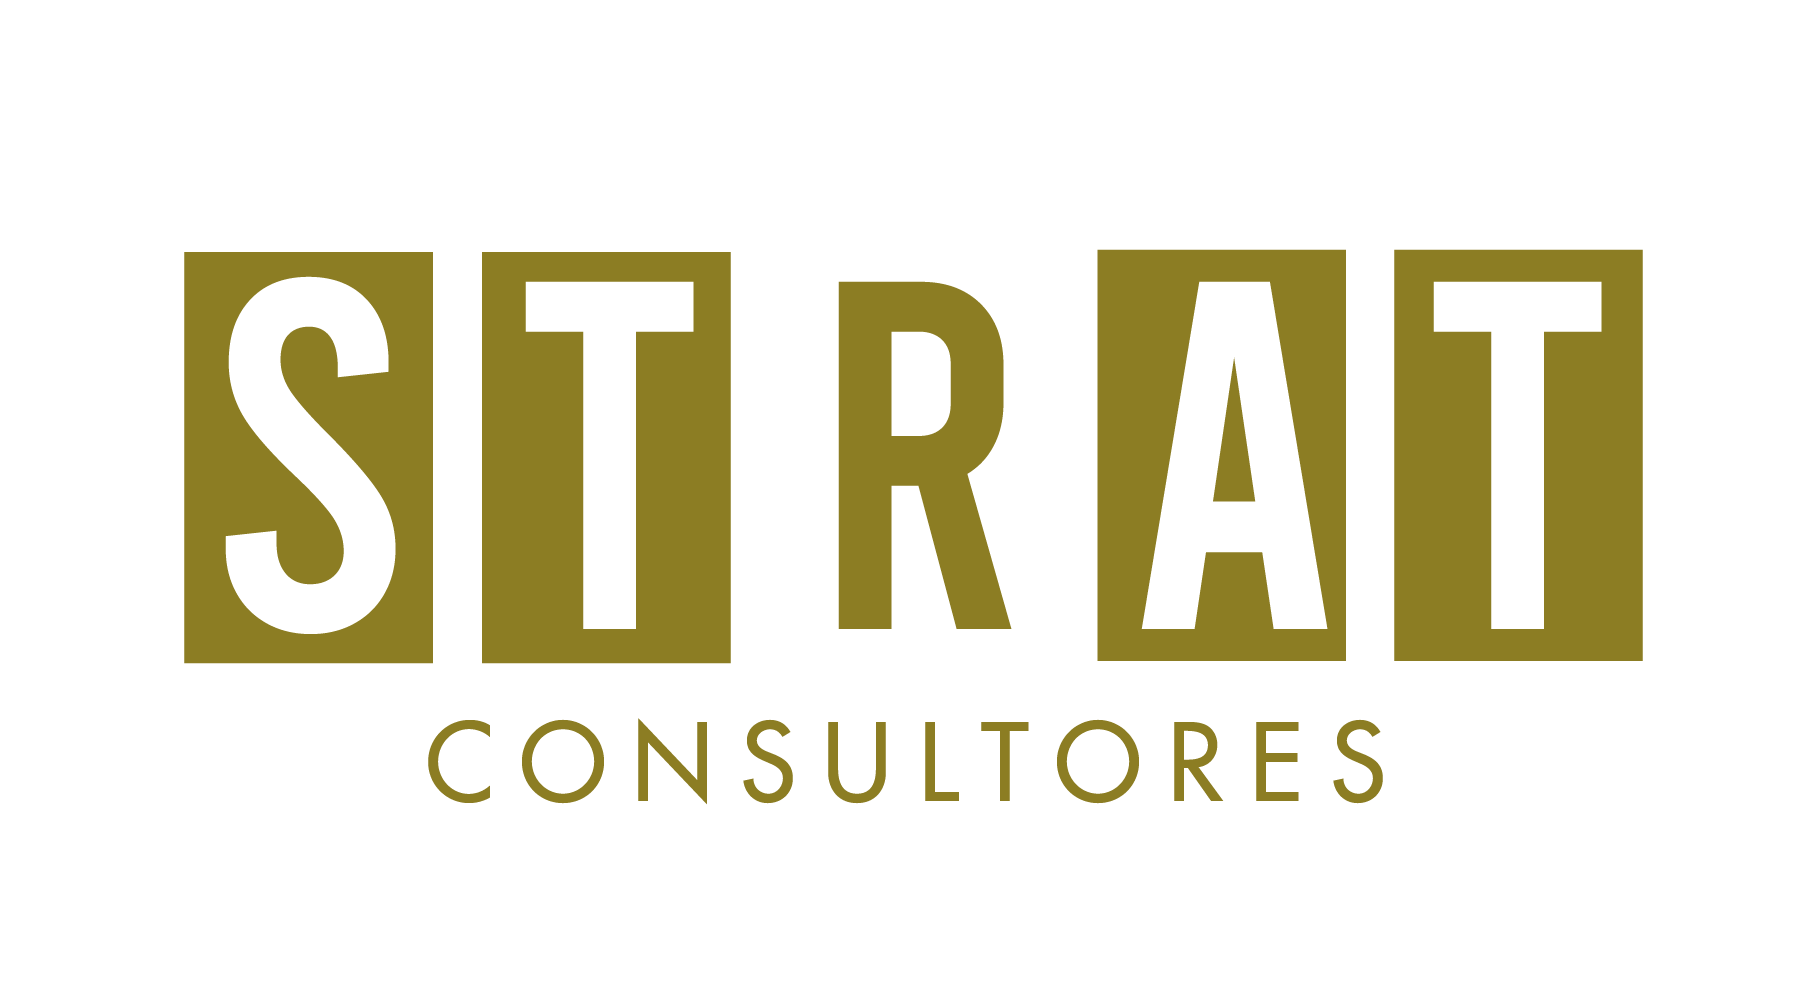 Logotipo Strat consultores